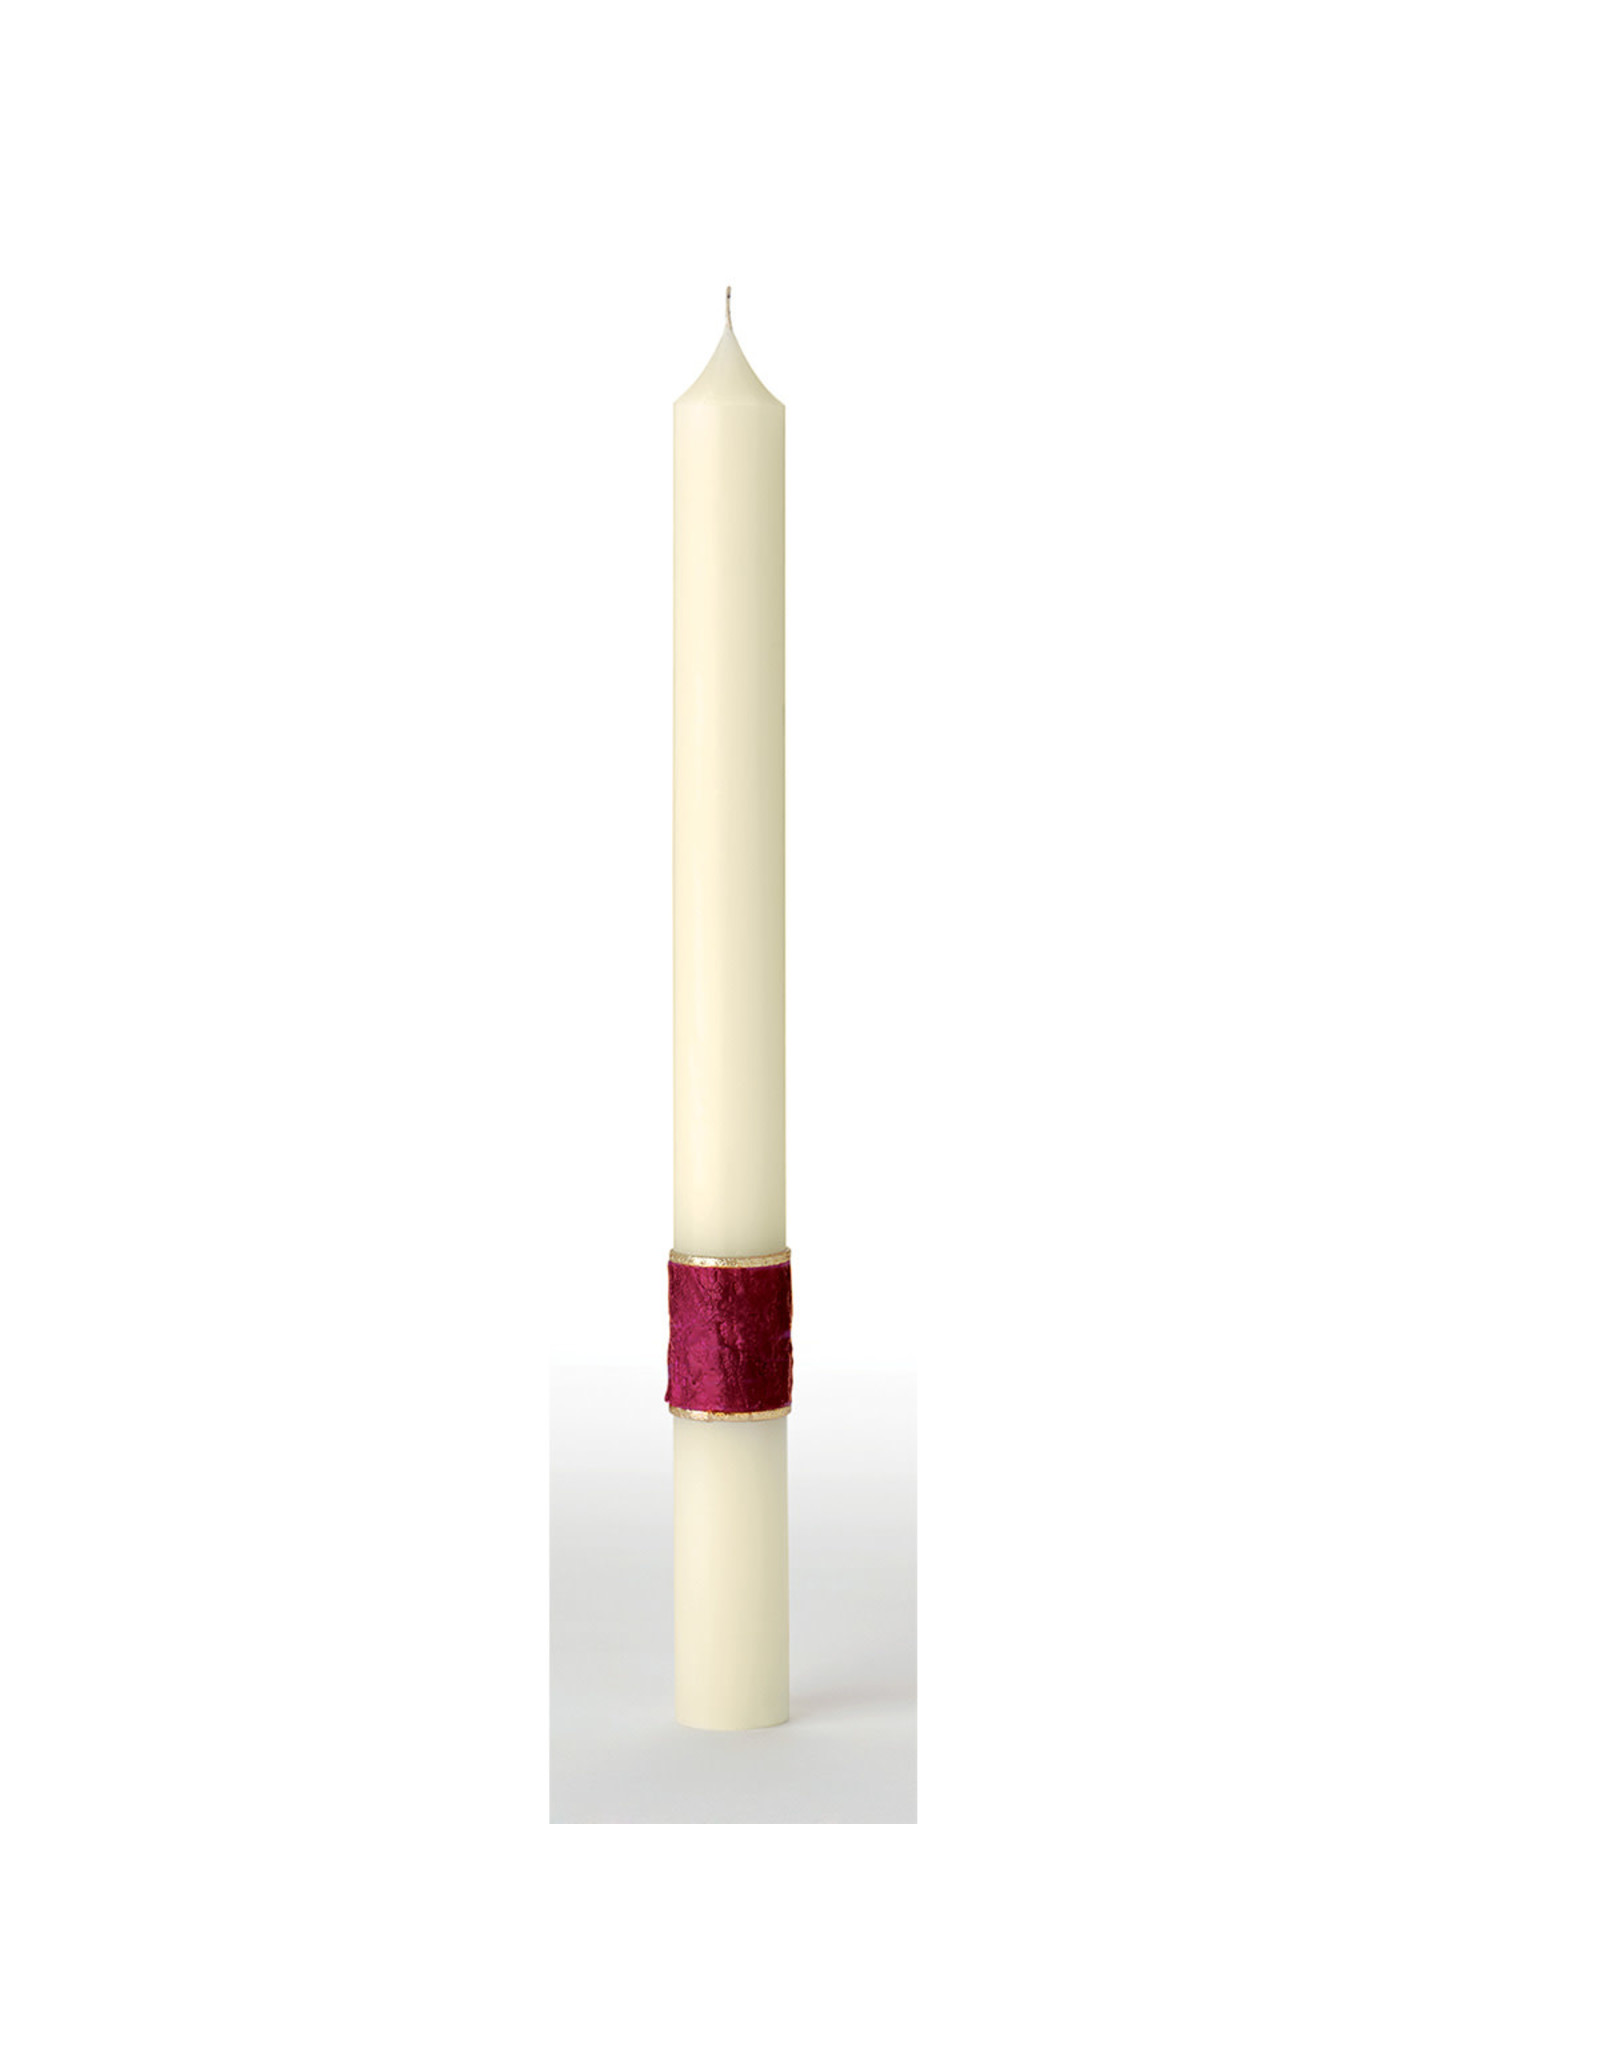 Matching Altar Candles (Pair)